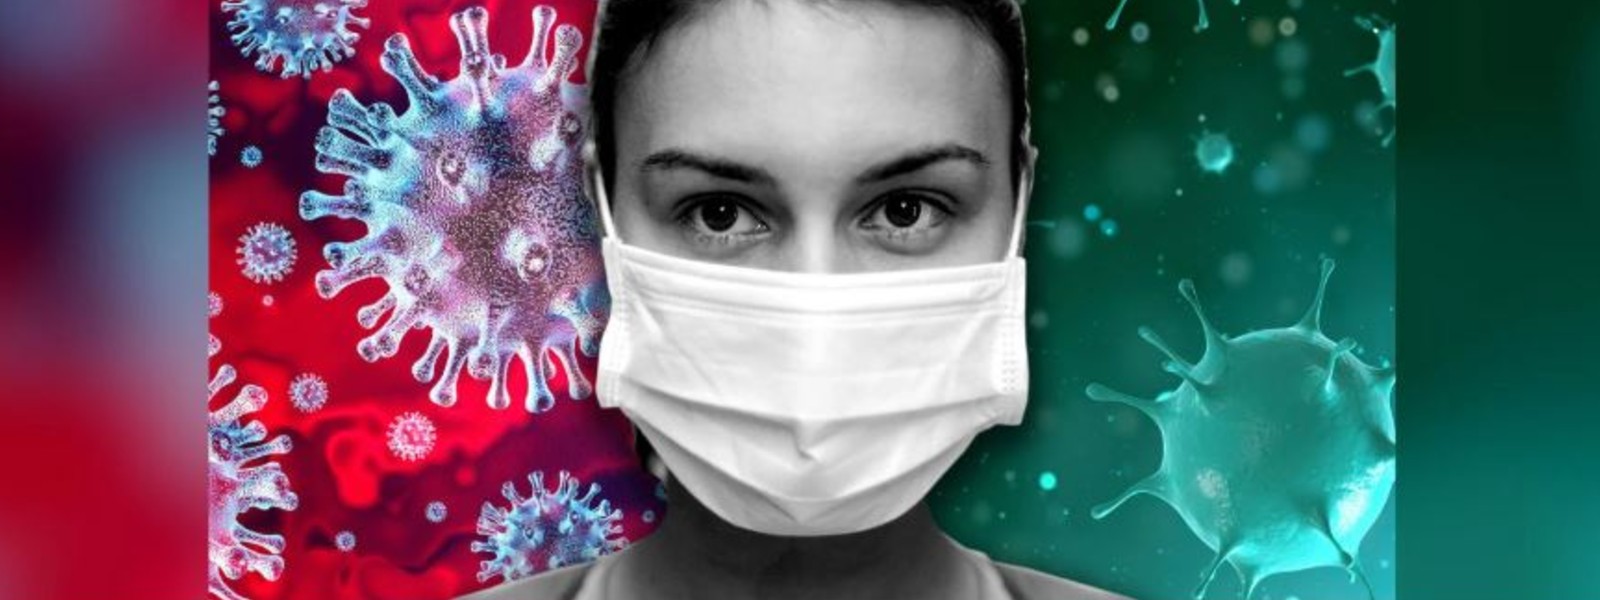 1,441 failing to wear face masks, sent to self-quarantine